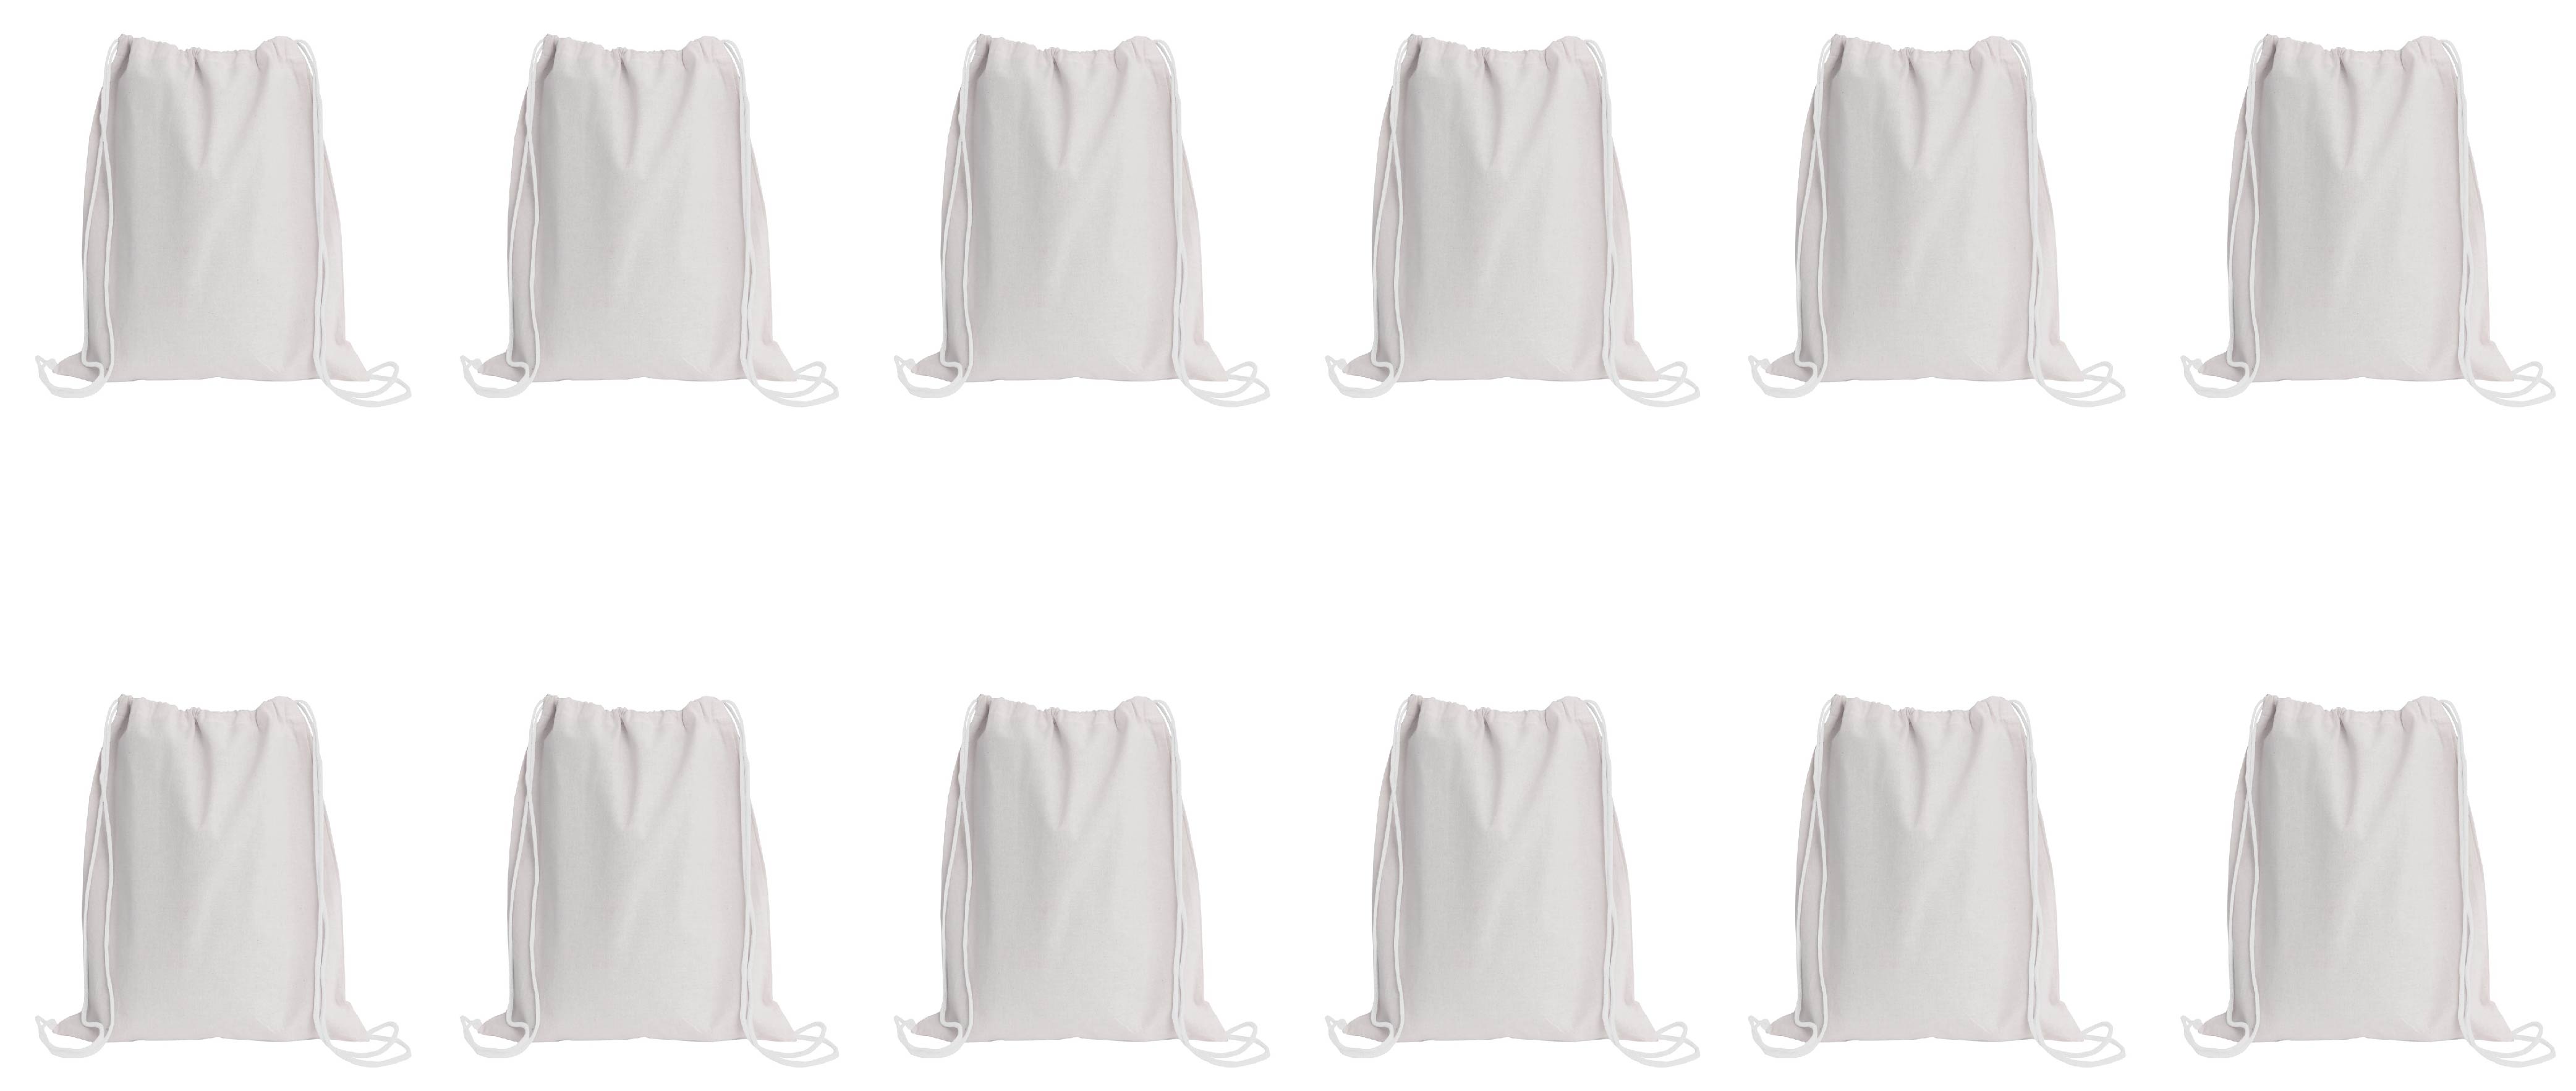 Sport Drawstring Bag, 100% Cotton, White Color